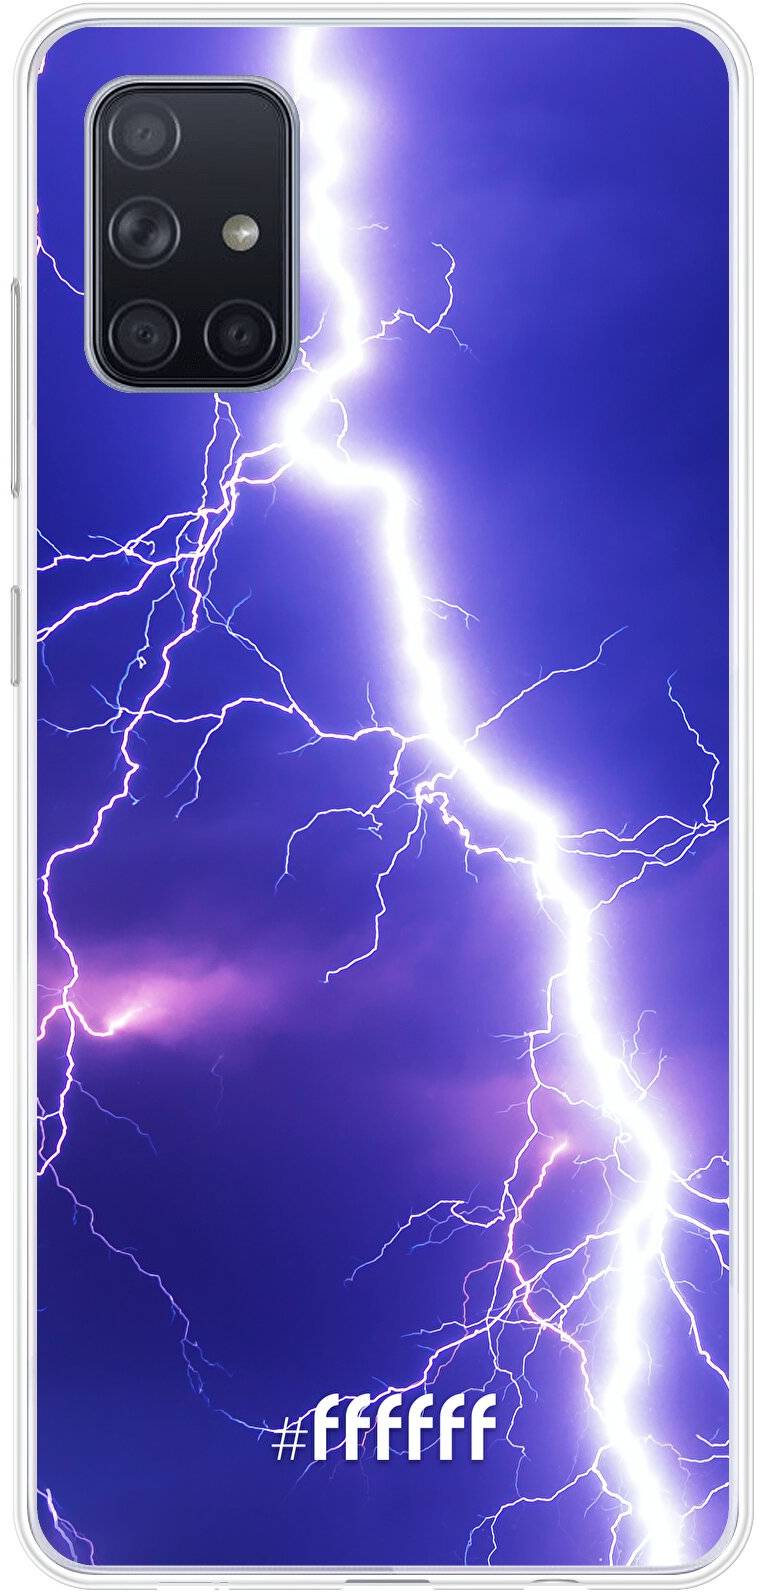 Thunderbolt Galaxy A71